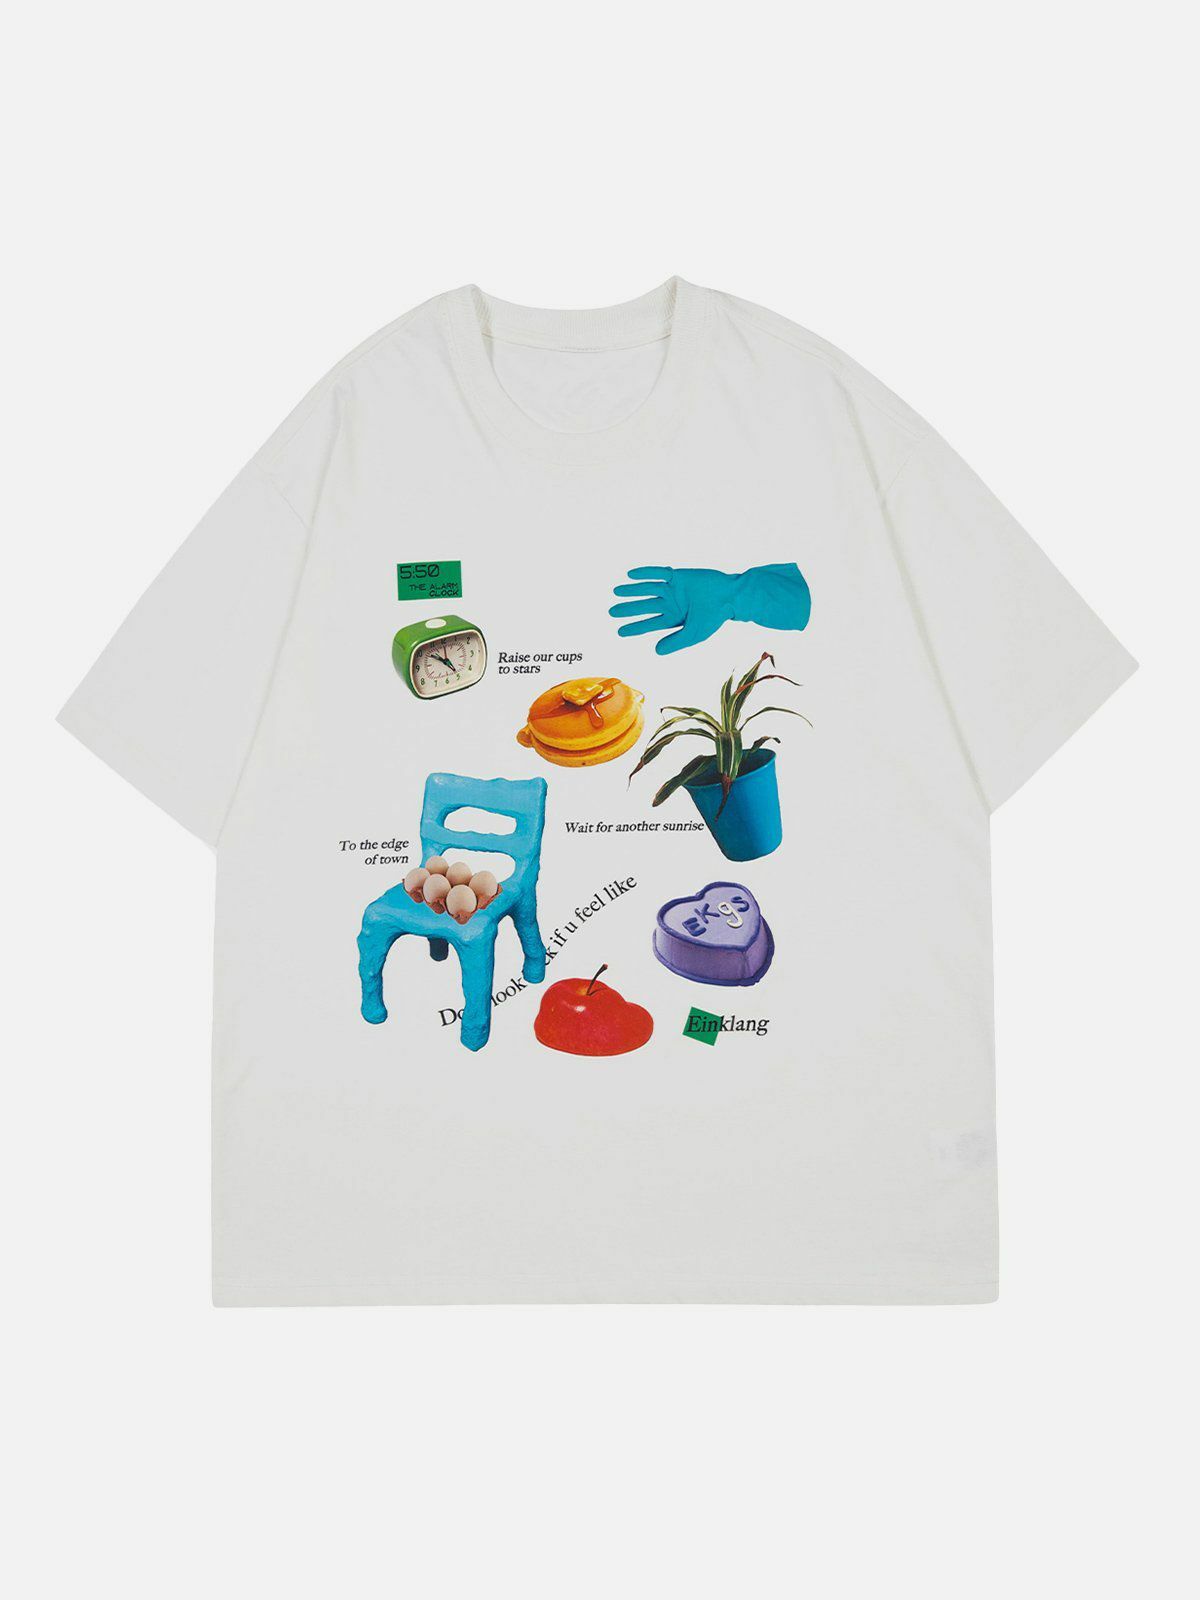 retro kitchen print tee edgy  vibrant streetwear essential 8106